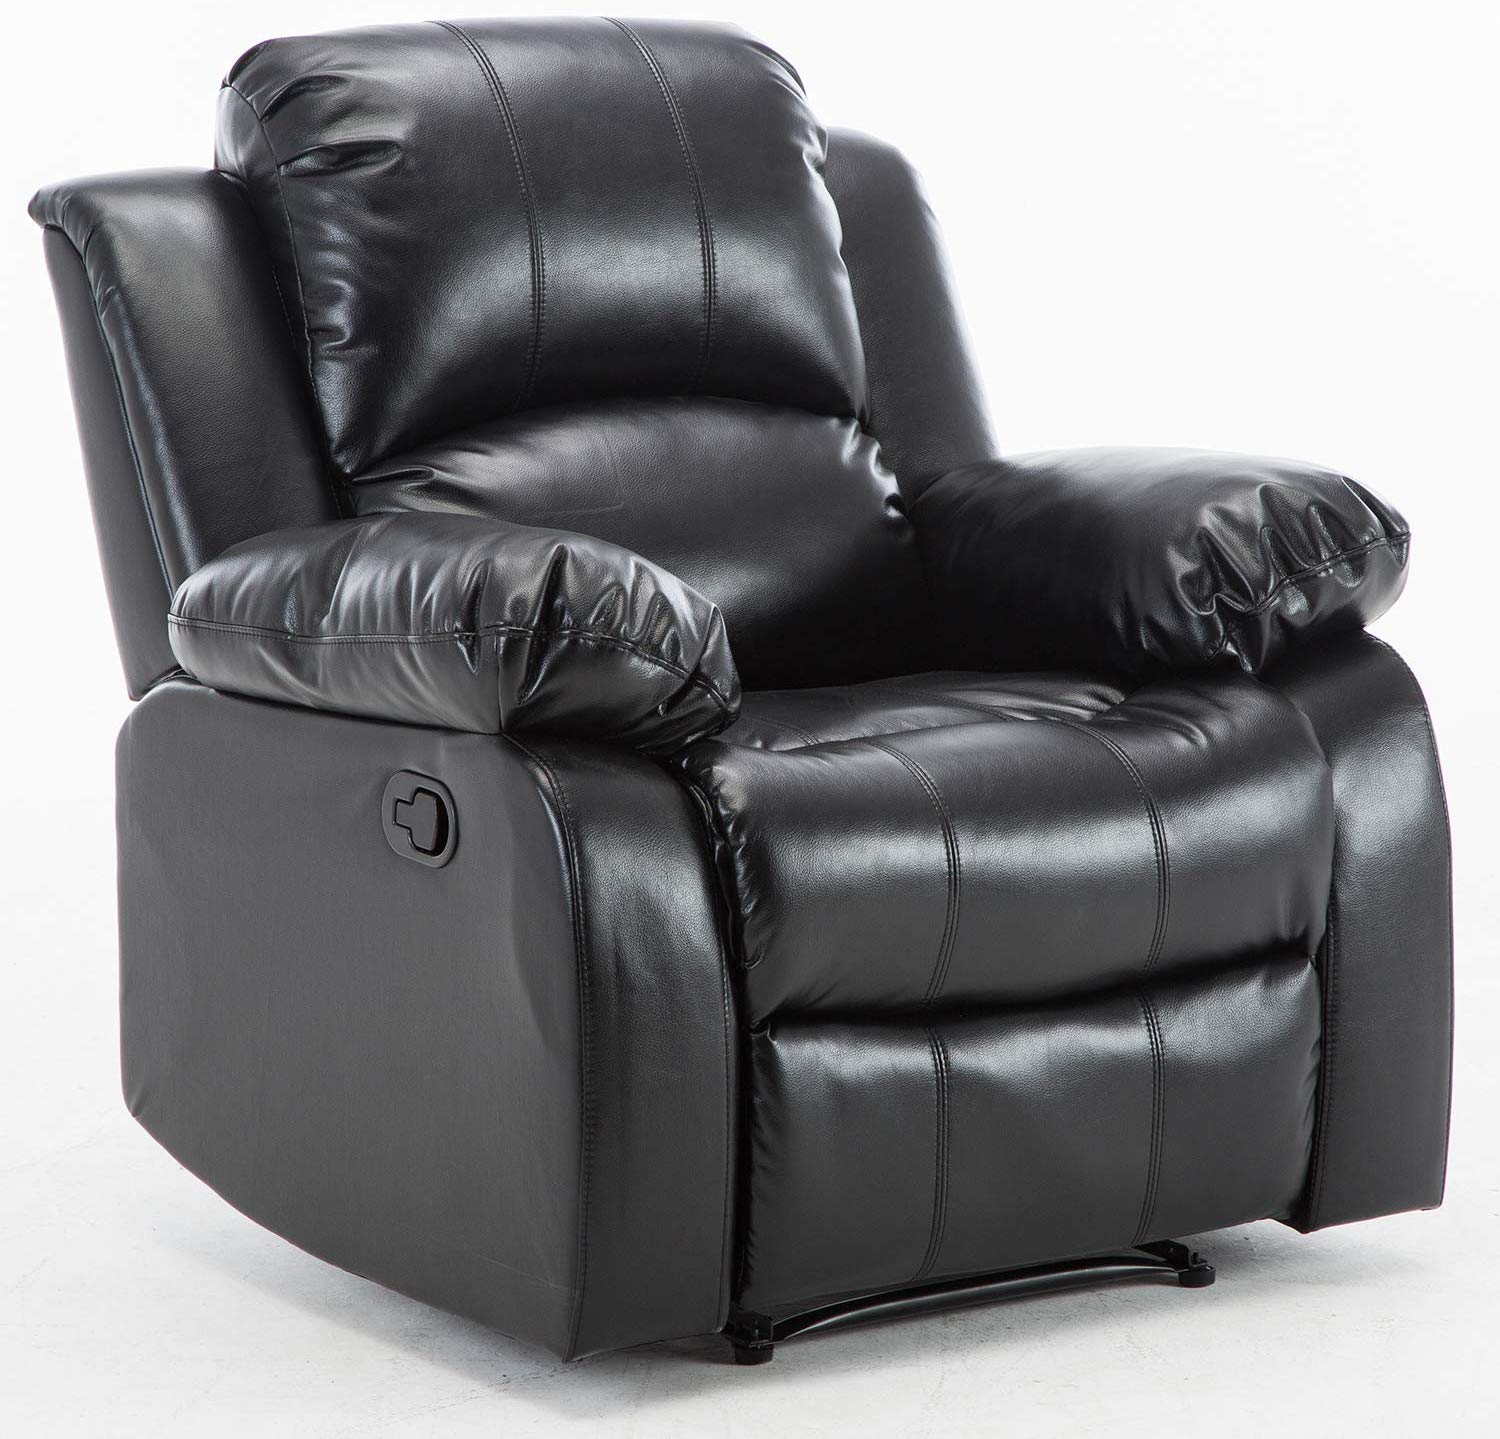 Bonzy Home Air Leather Recliner Chair